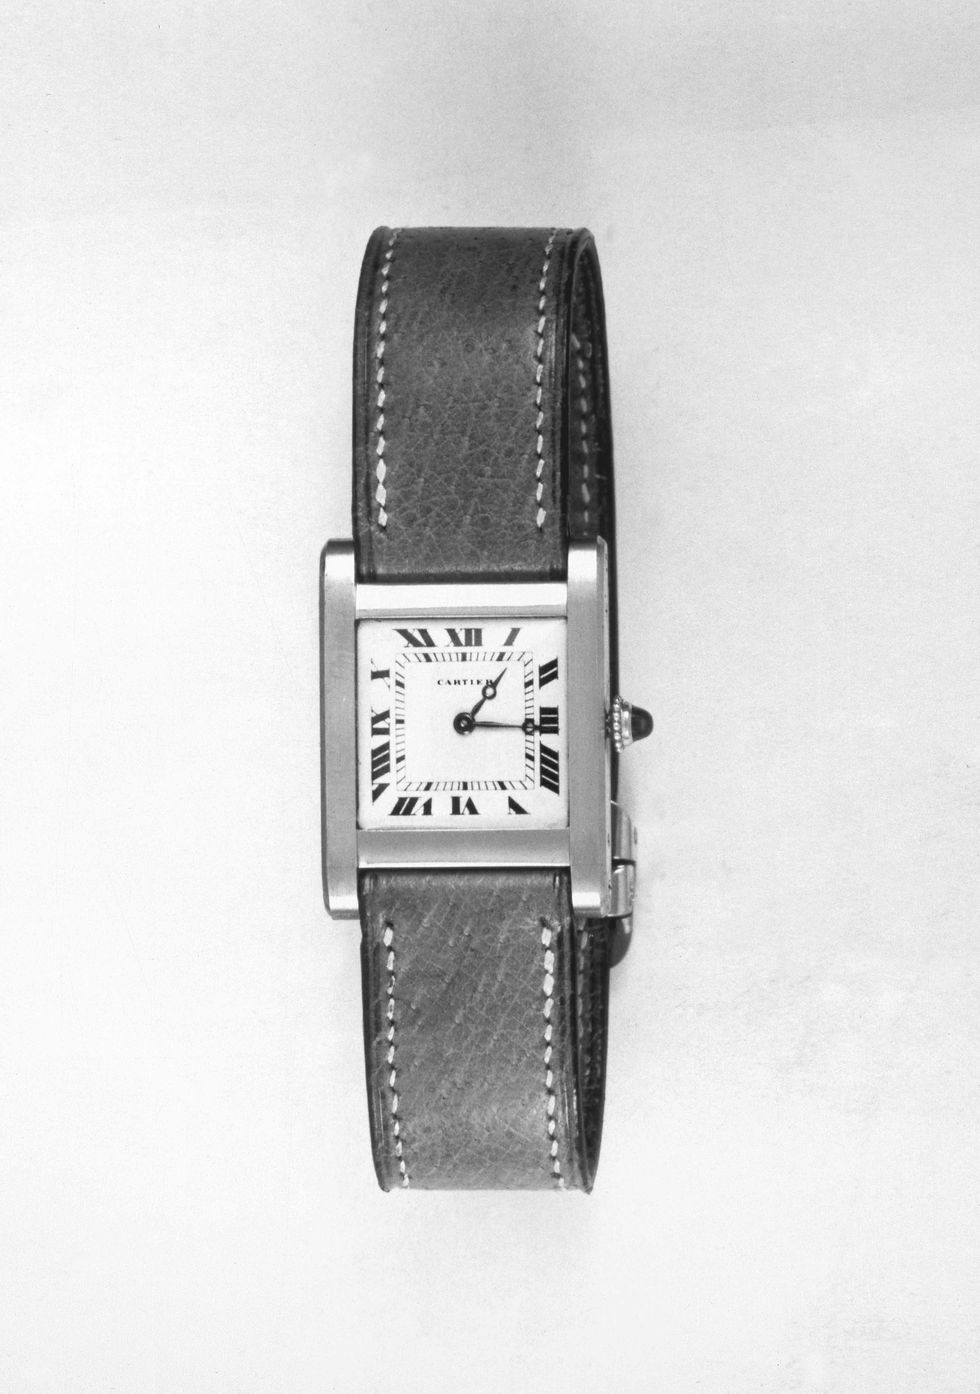 Story Behind Princess Diana's Beloved Cartier Tank Watch